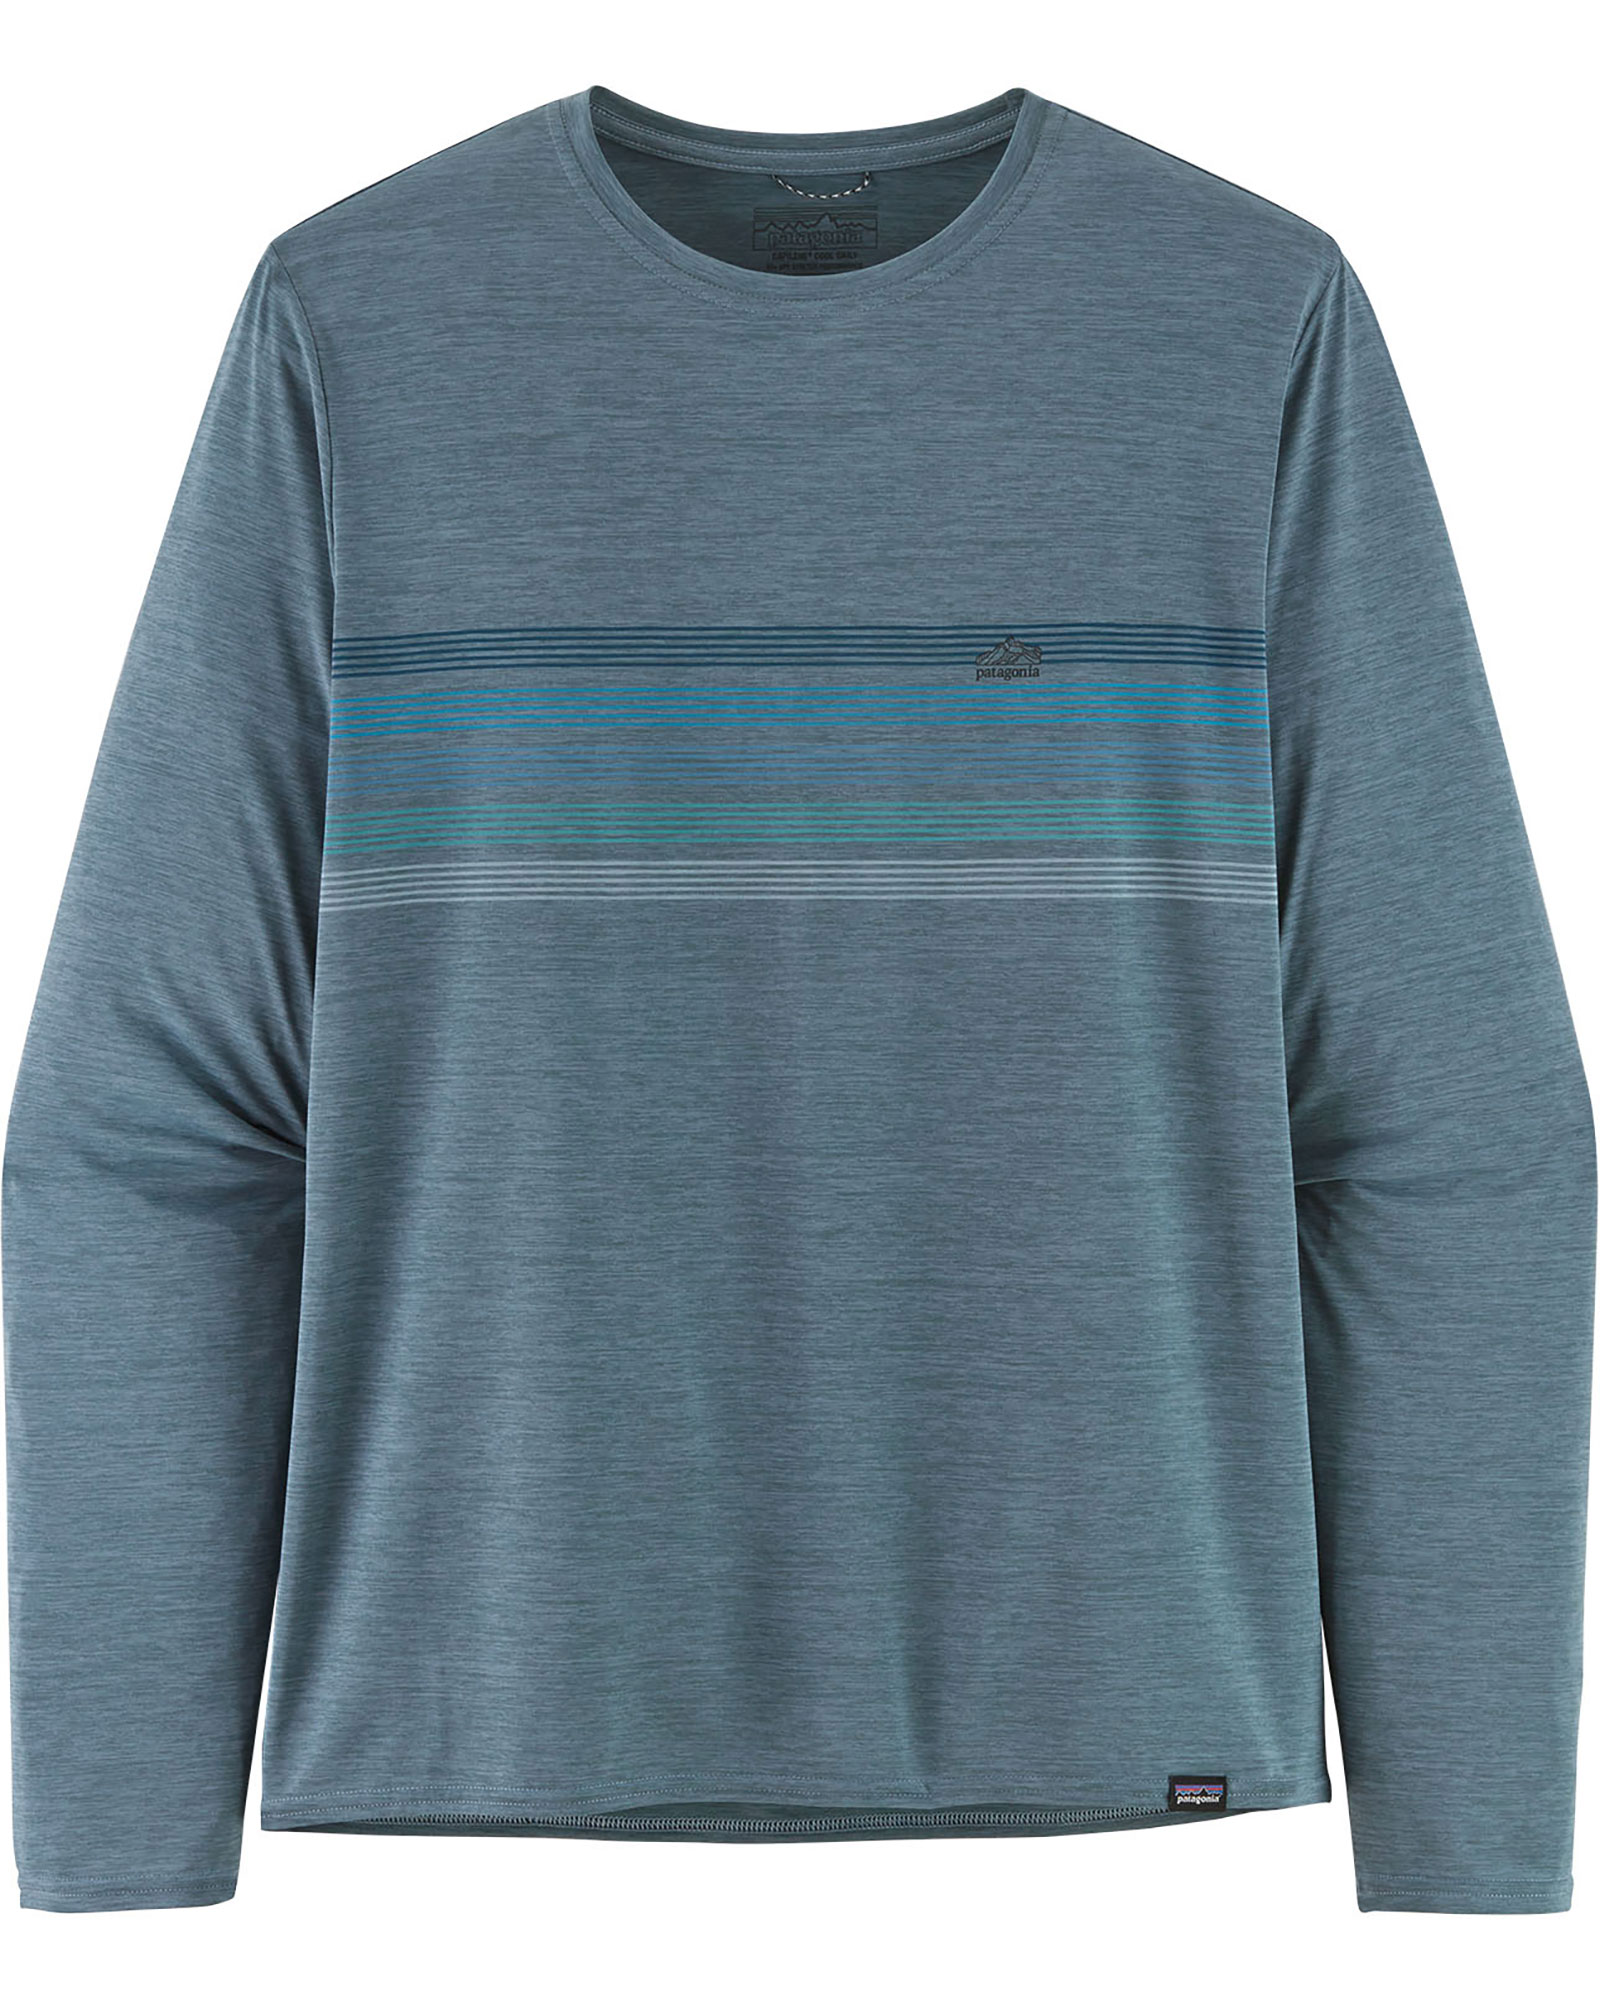 Patagonia Men's Long Sleeve Cap Cool Daily Graphic T-Shirt